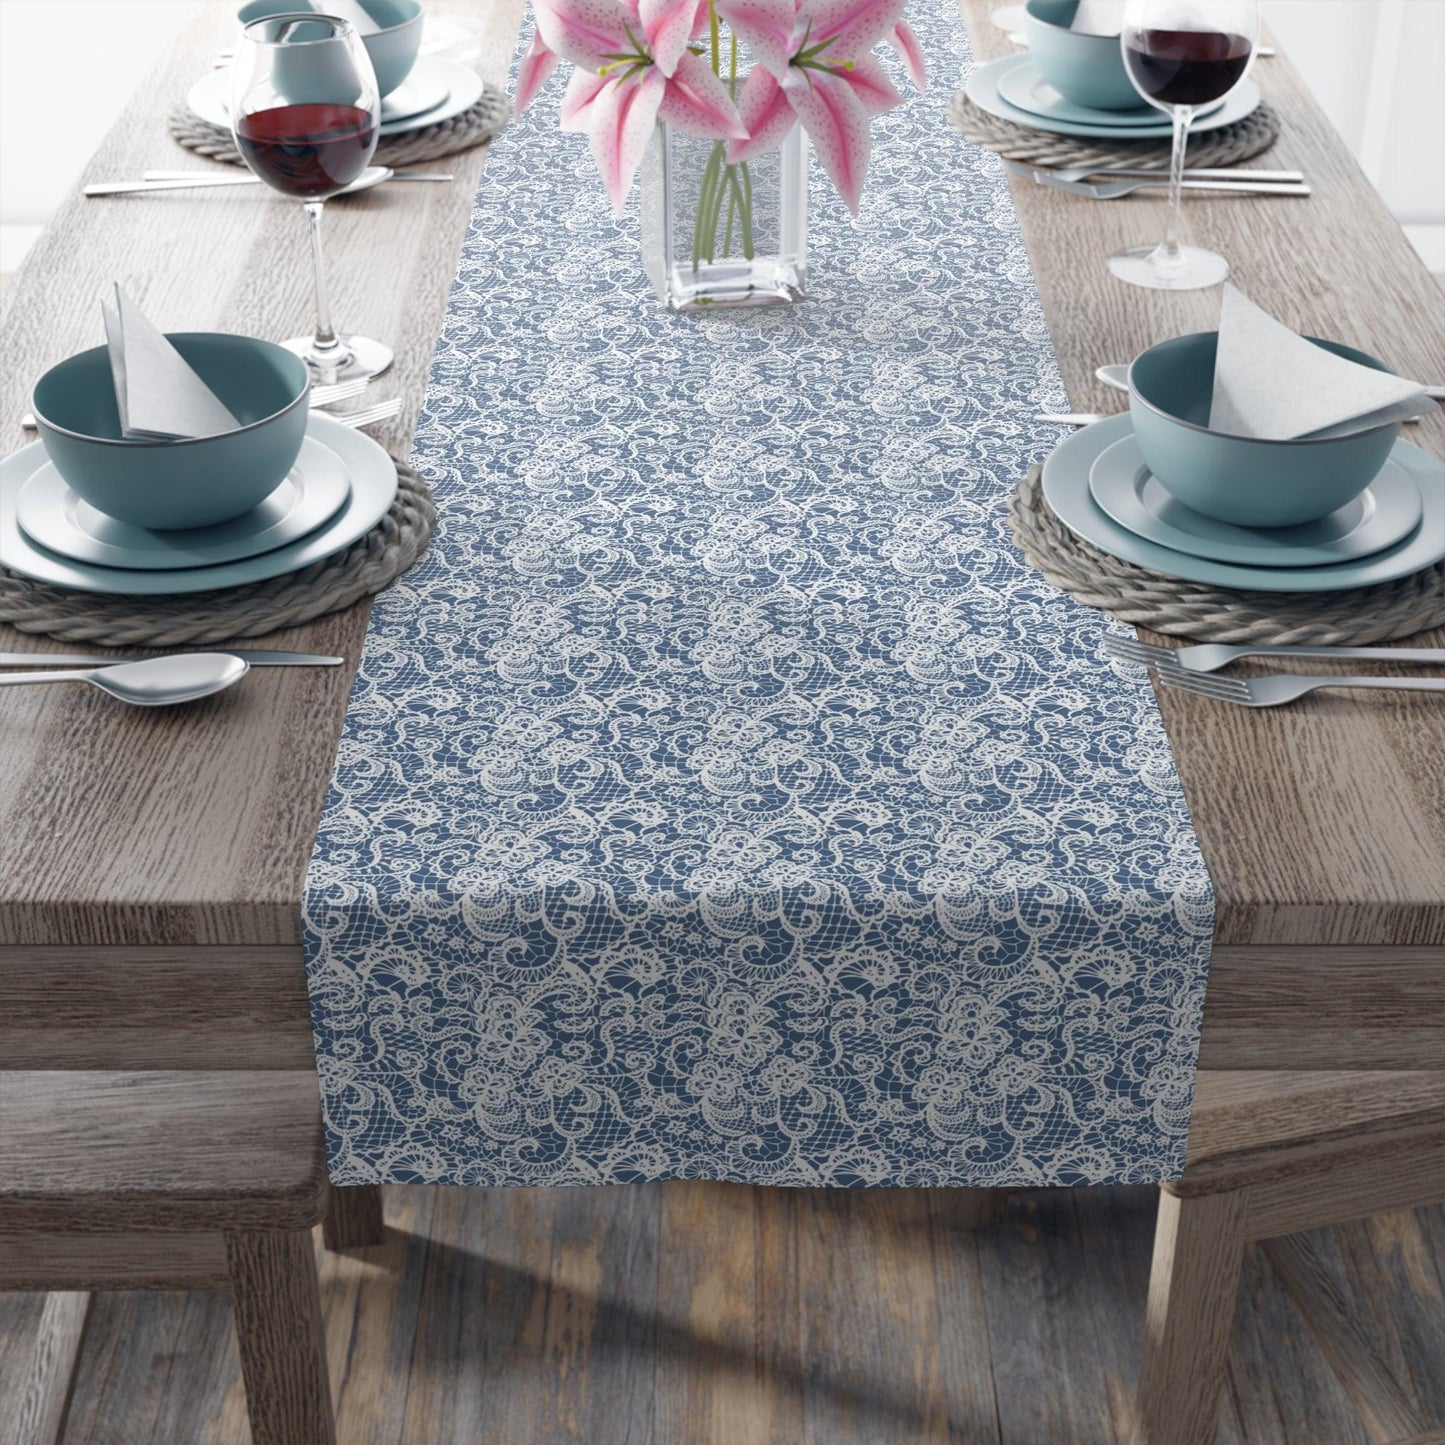 Blue lace print Table Runner (Cotton, Poly) - Cottage Garden Decor